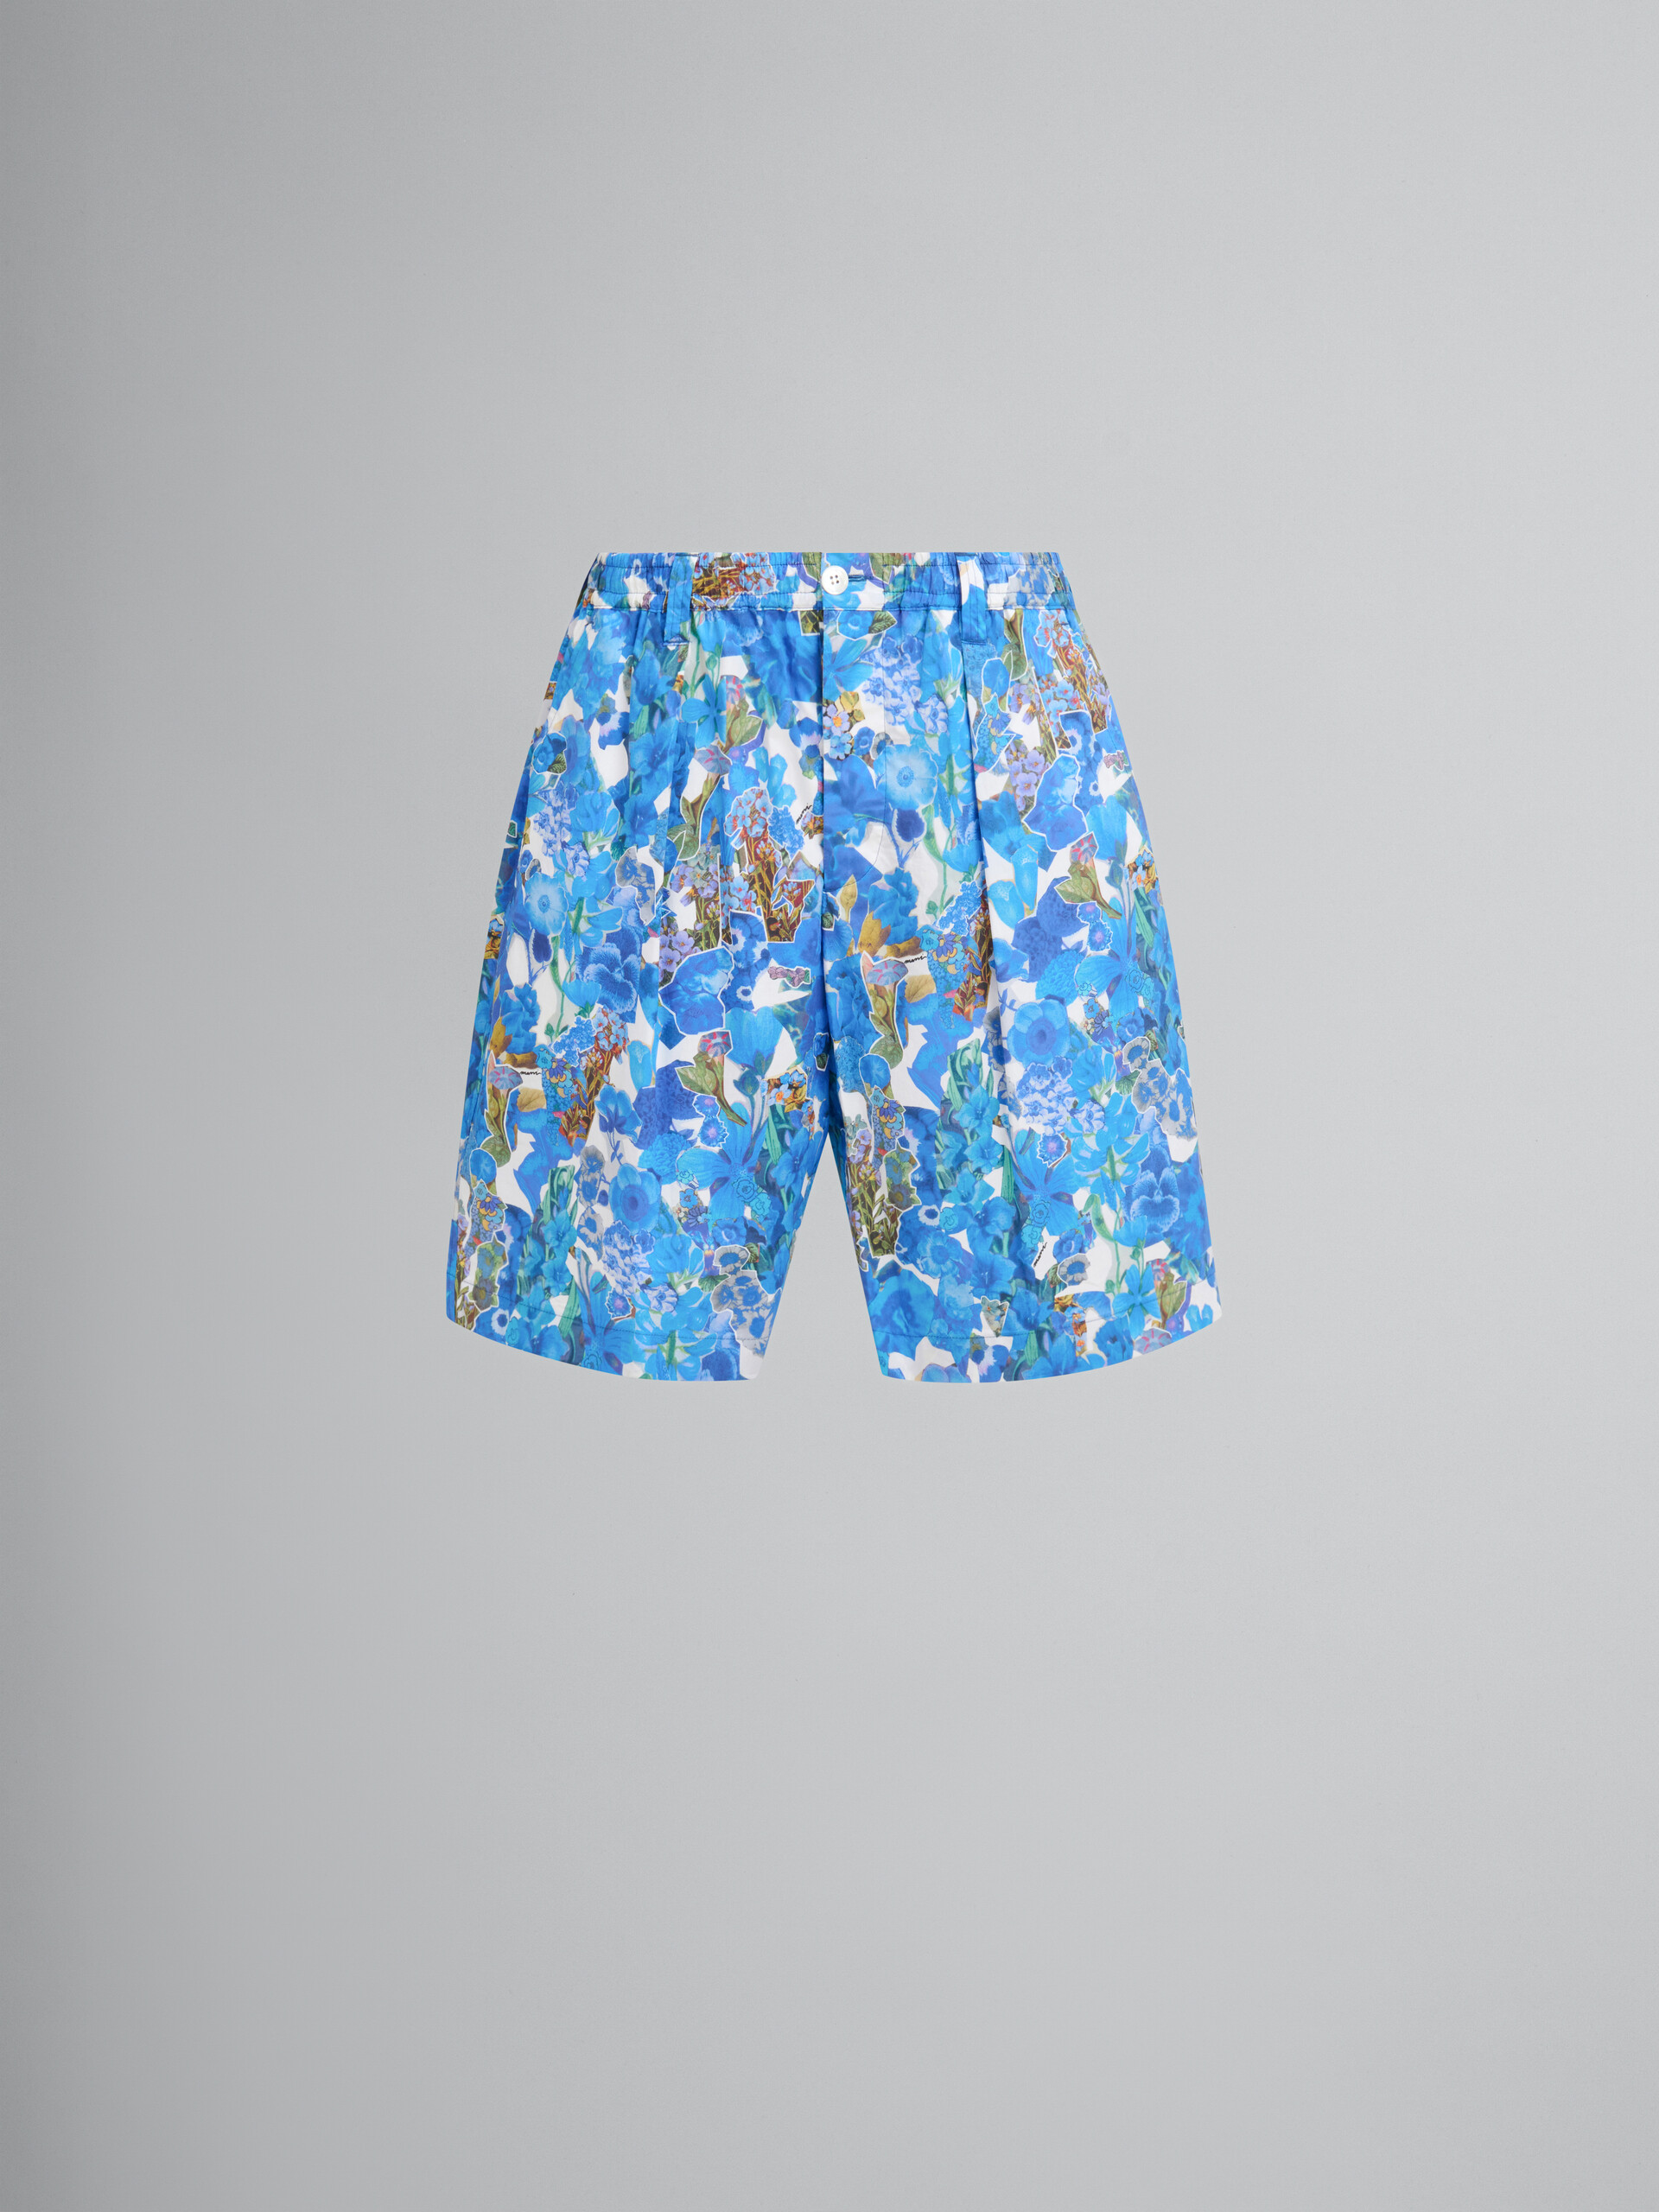 Cotton drawstring shorts with Allegro Blues print - Pants - Image 1